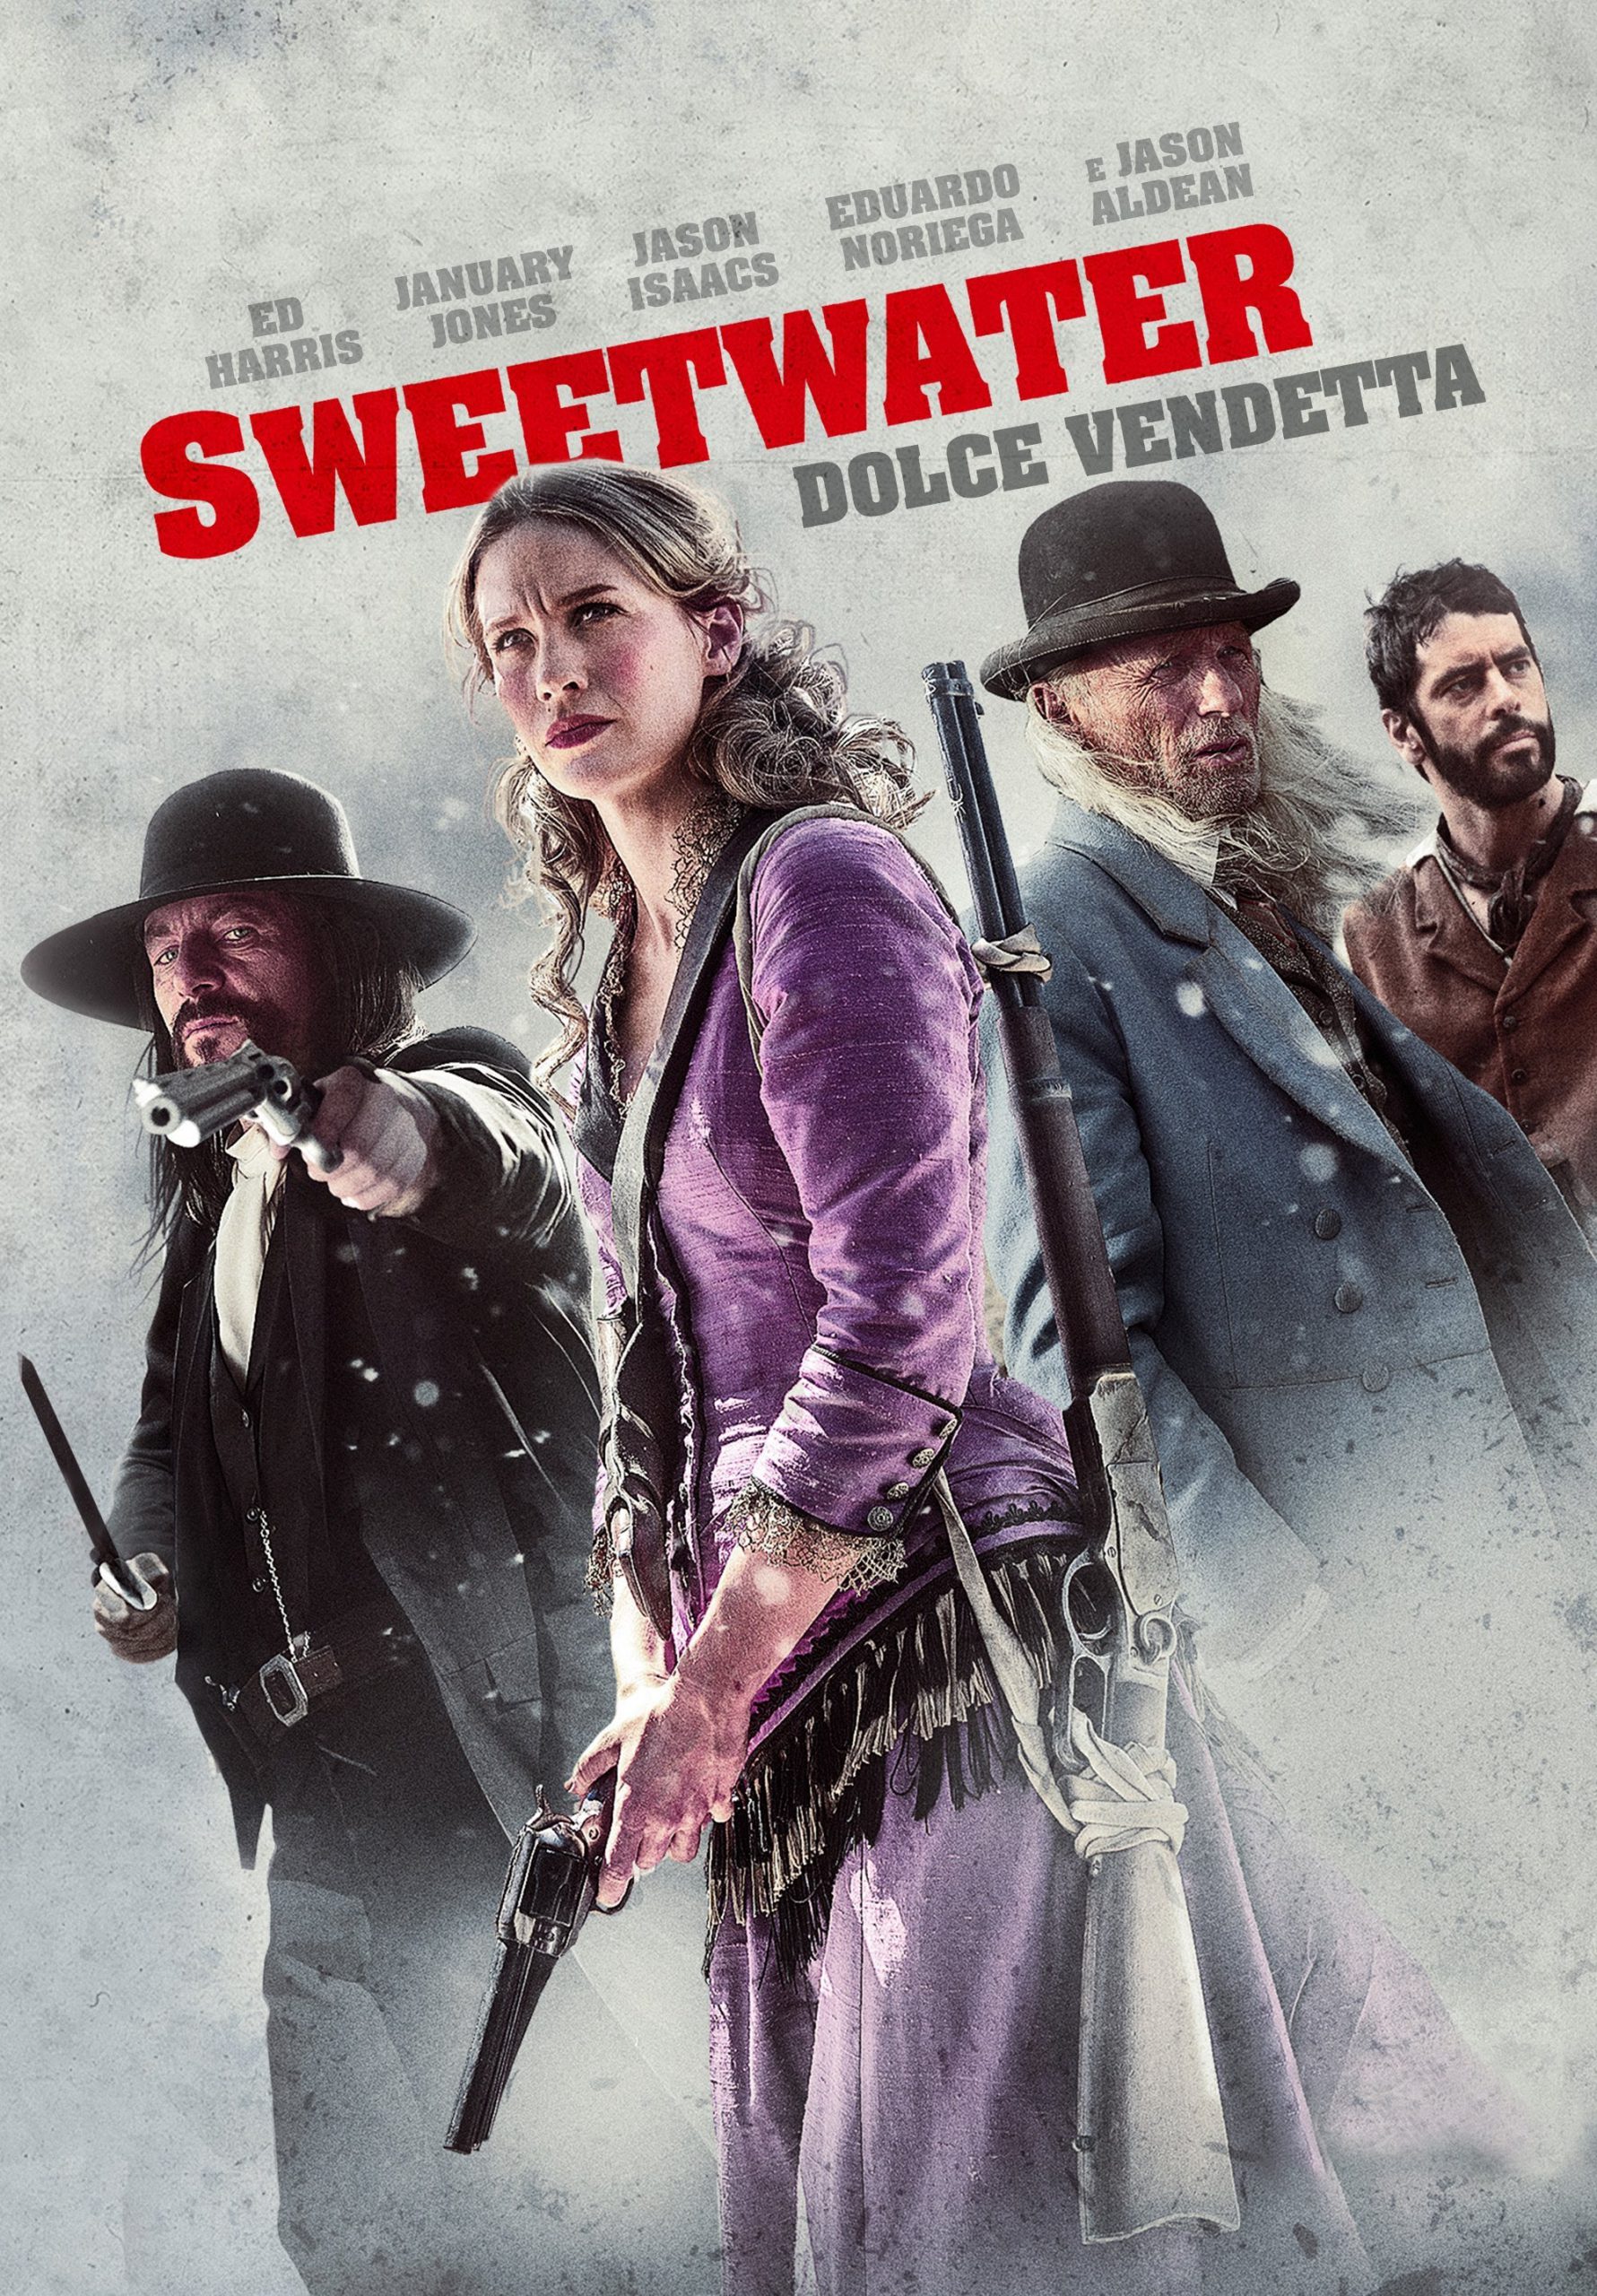 Sweetwater – Dolce vendetta [HD] (2013)